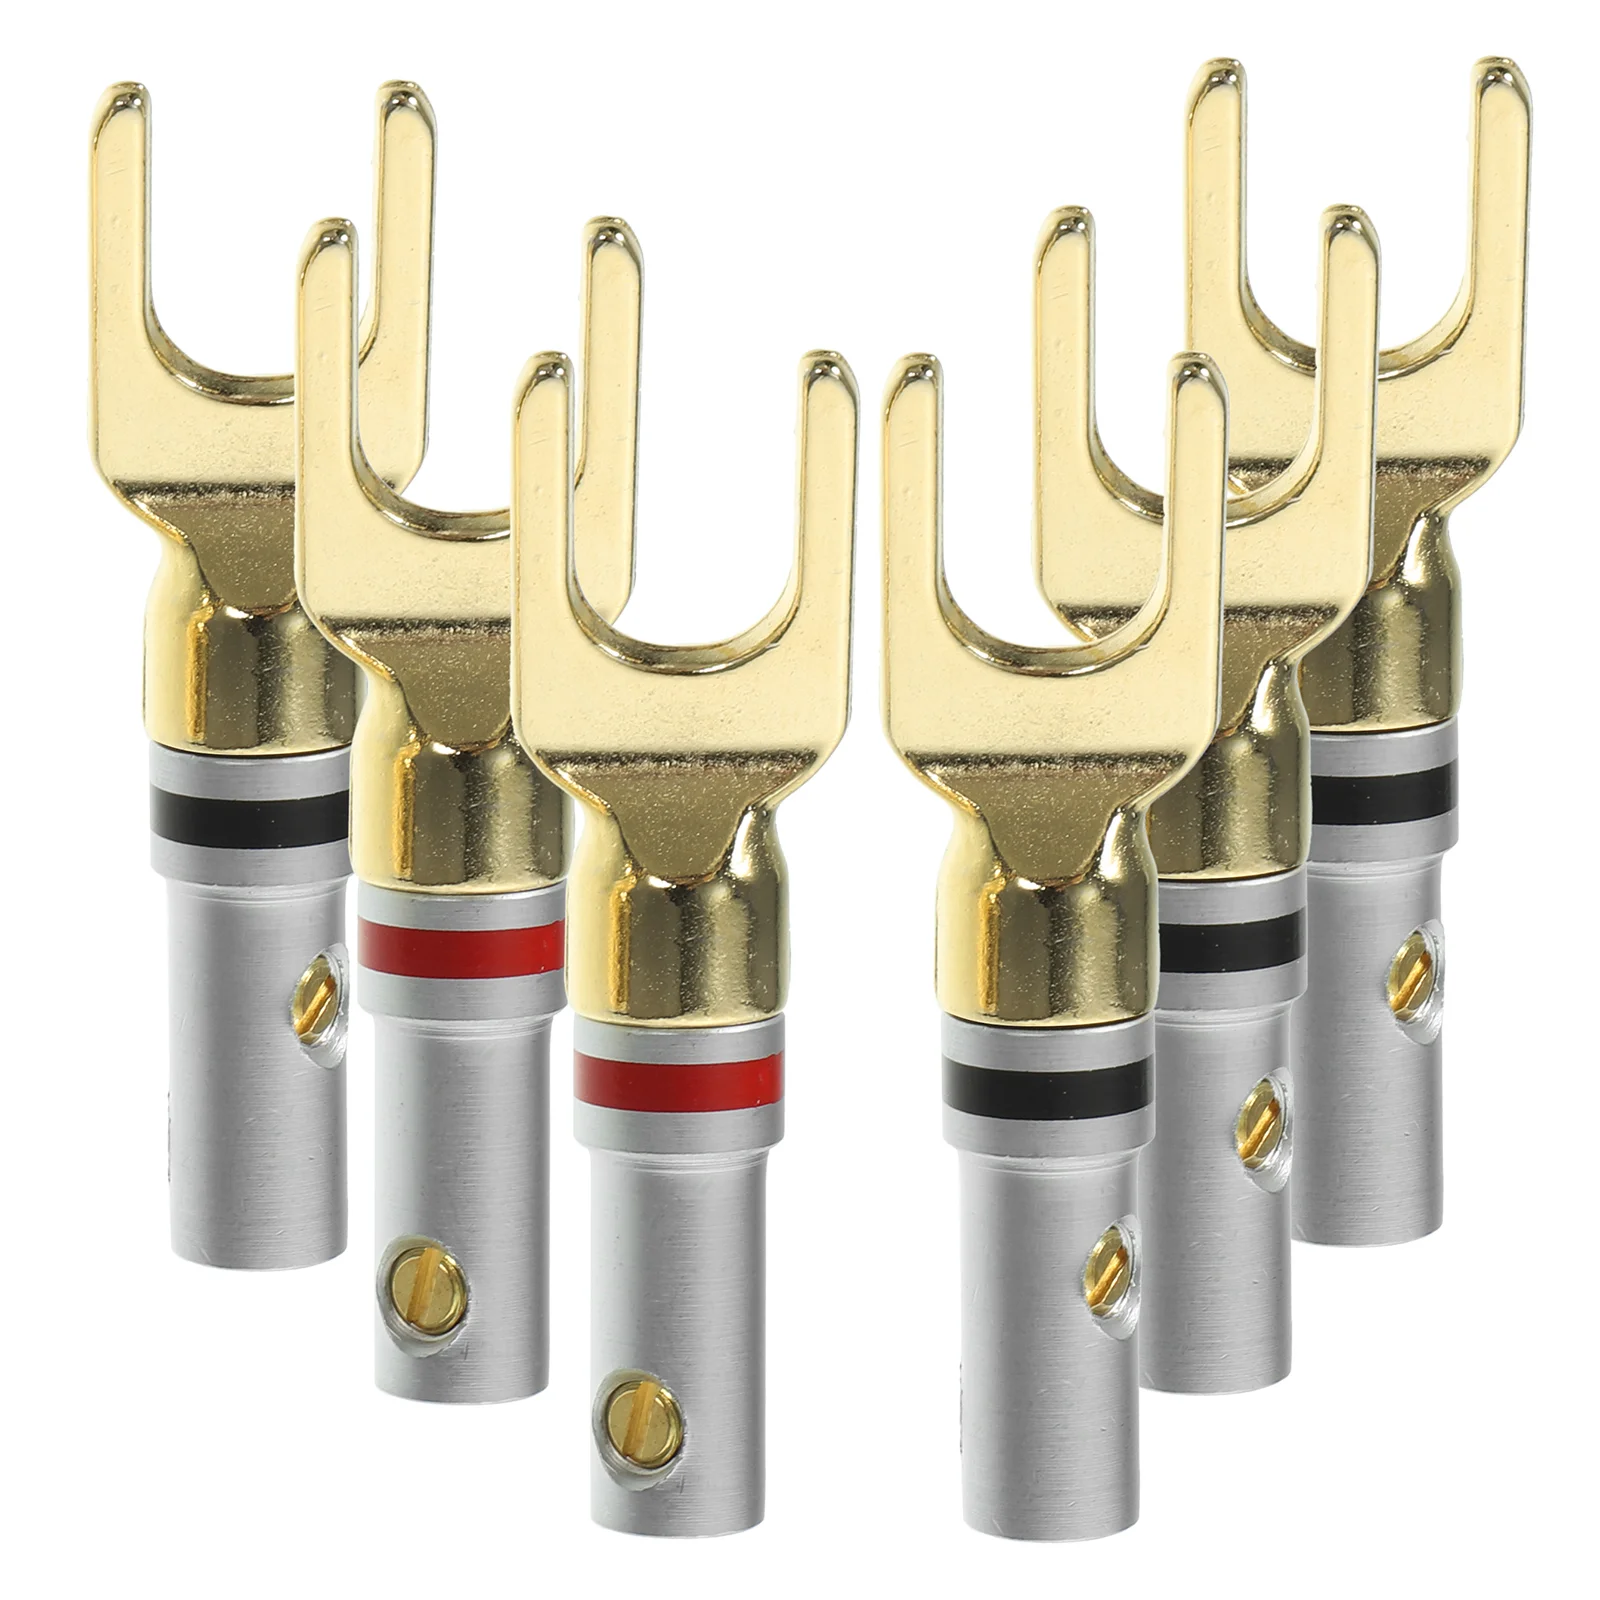 

6 Pcs Speaker Audio Cable Plug Y Fork Trumpet Post Spade Connectors Banana Wire Adapter Aluminum Alloy Terminal